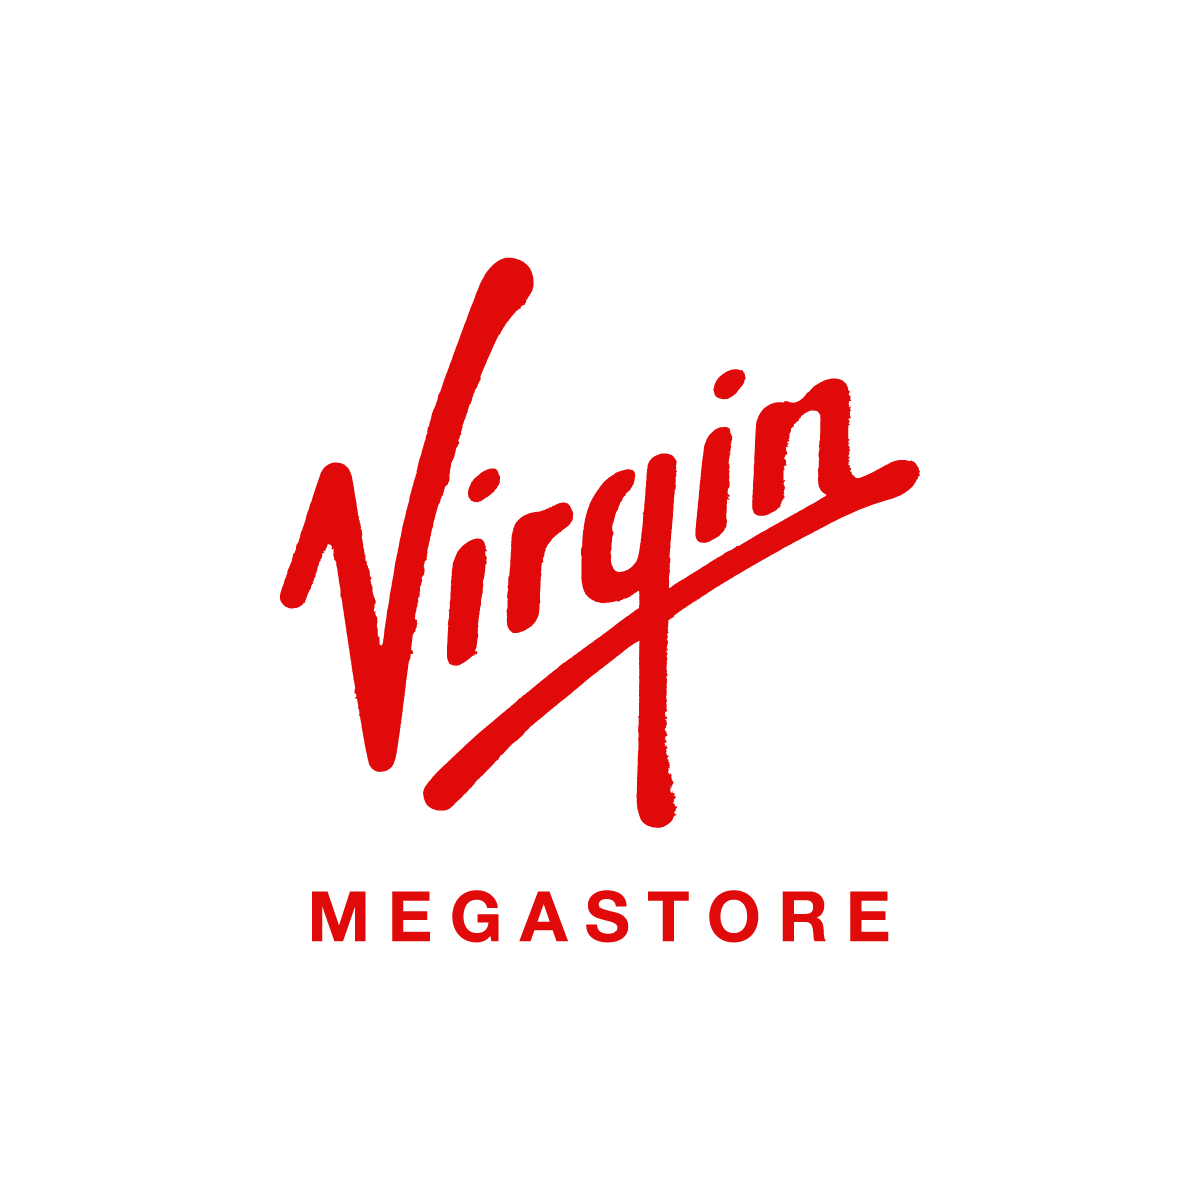 Virgin Megastore Dubai 04 284 2318